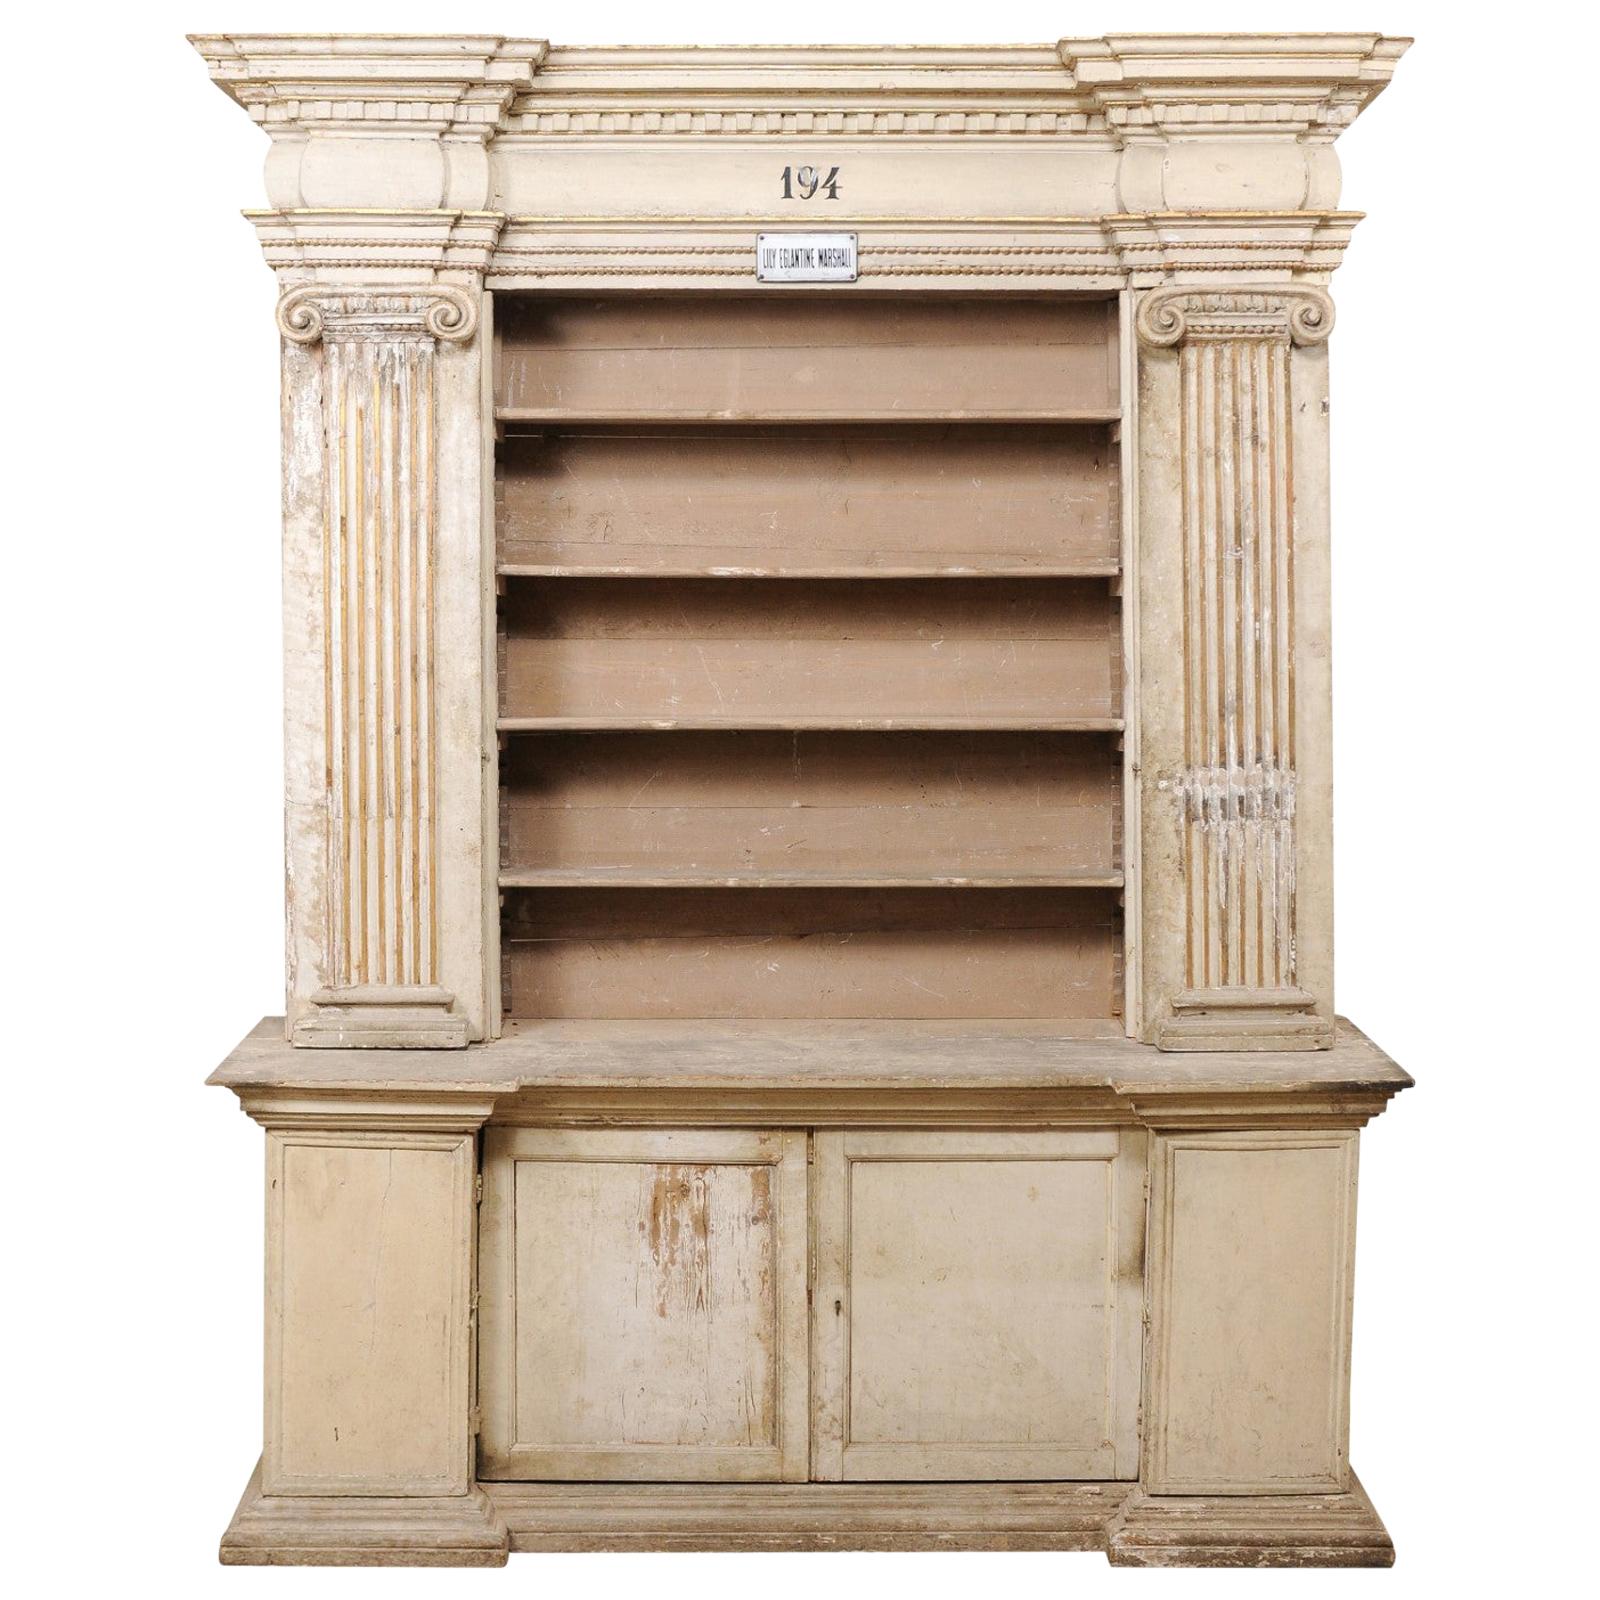 A Grand 18th C. Italian Church Cabinet w/ Roman Ionic Columns & Original Paint For Sale